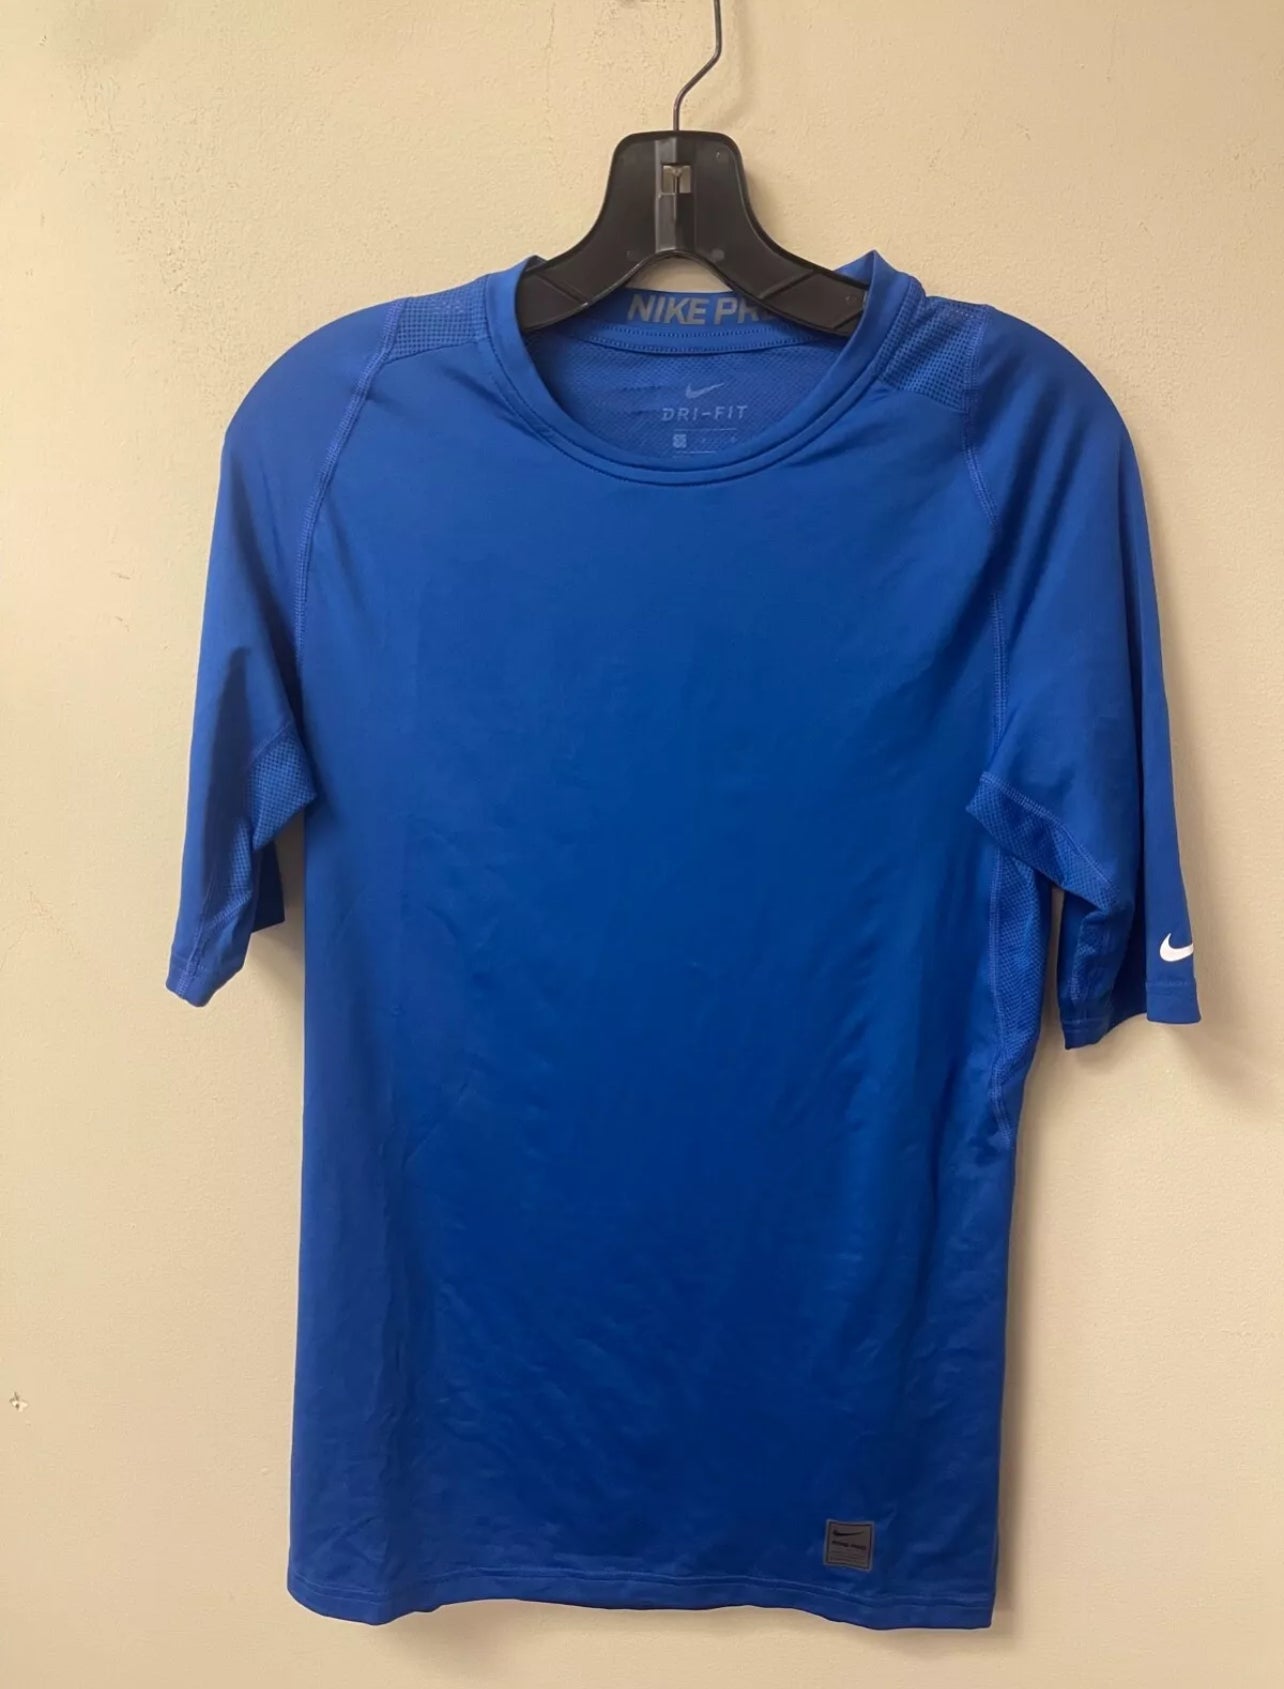 Nike Dri-Fit Pro Stock Compession 1/2 Sleeve Shirt